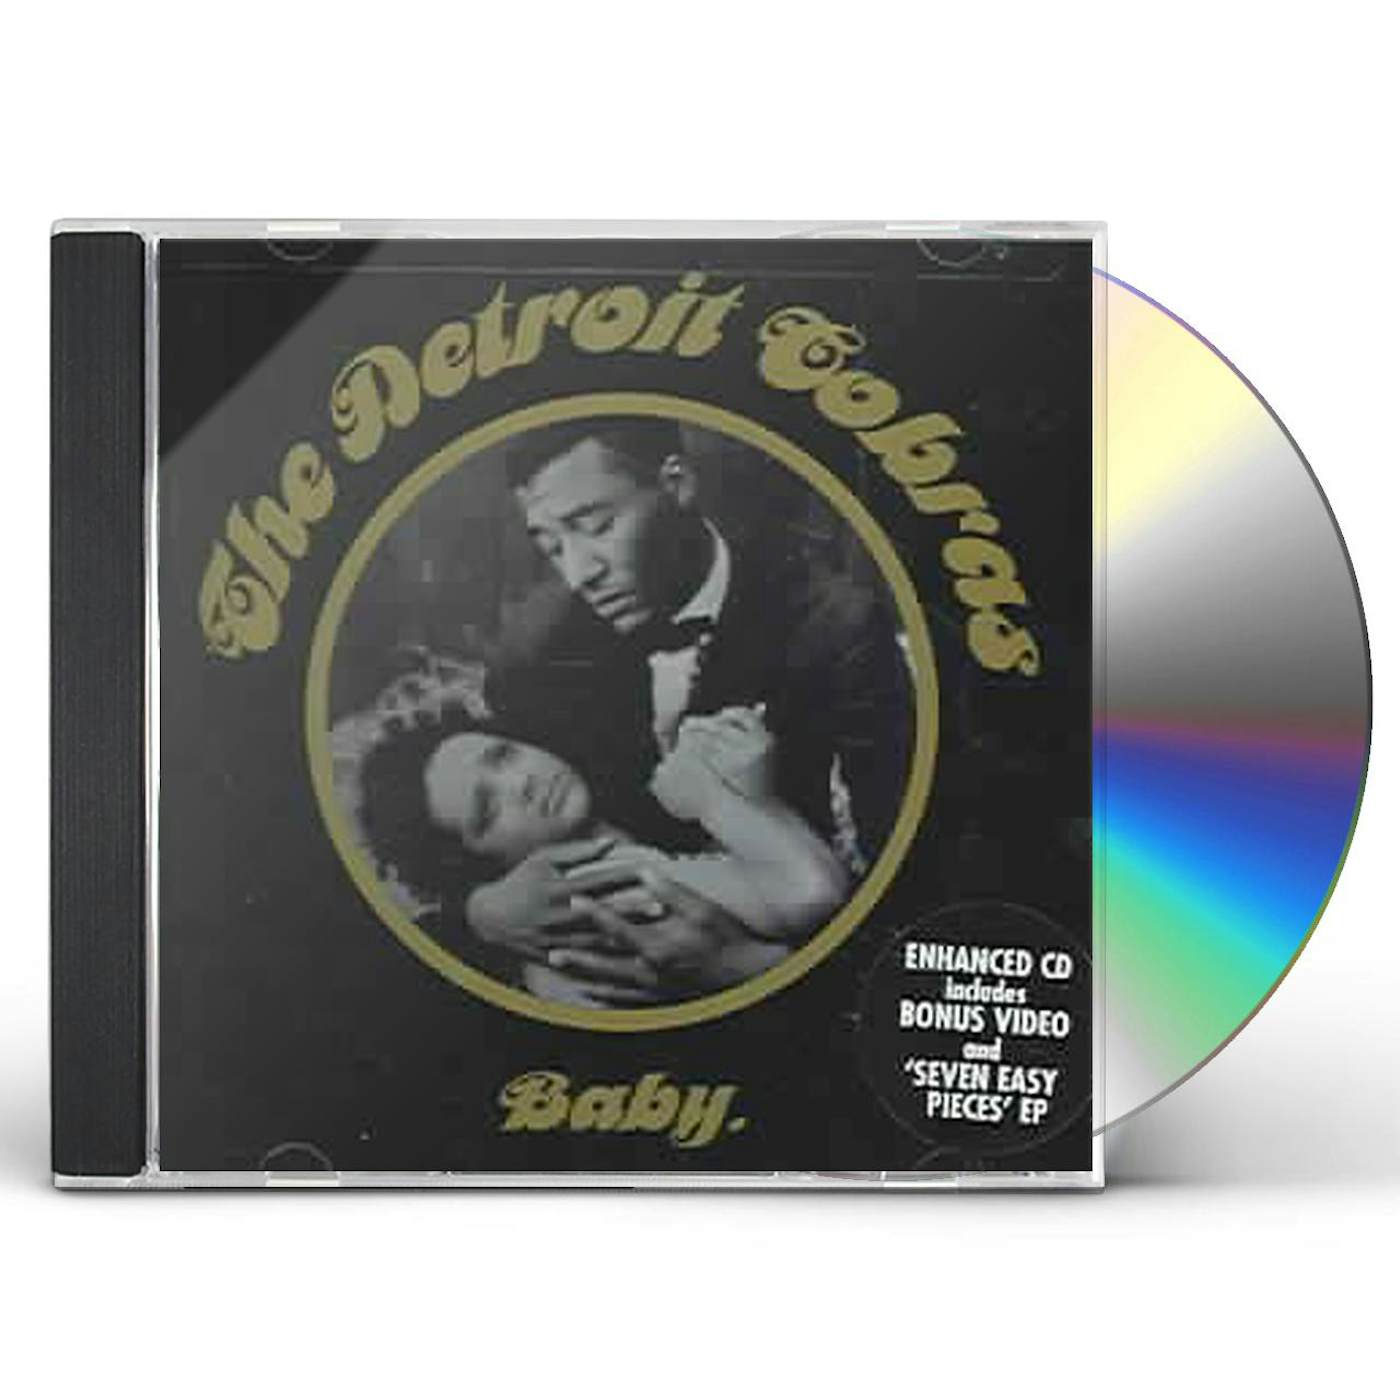 The Detroit Cobras BABY CD